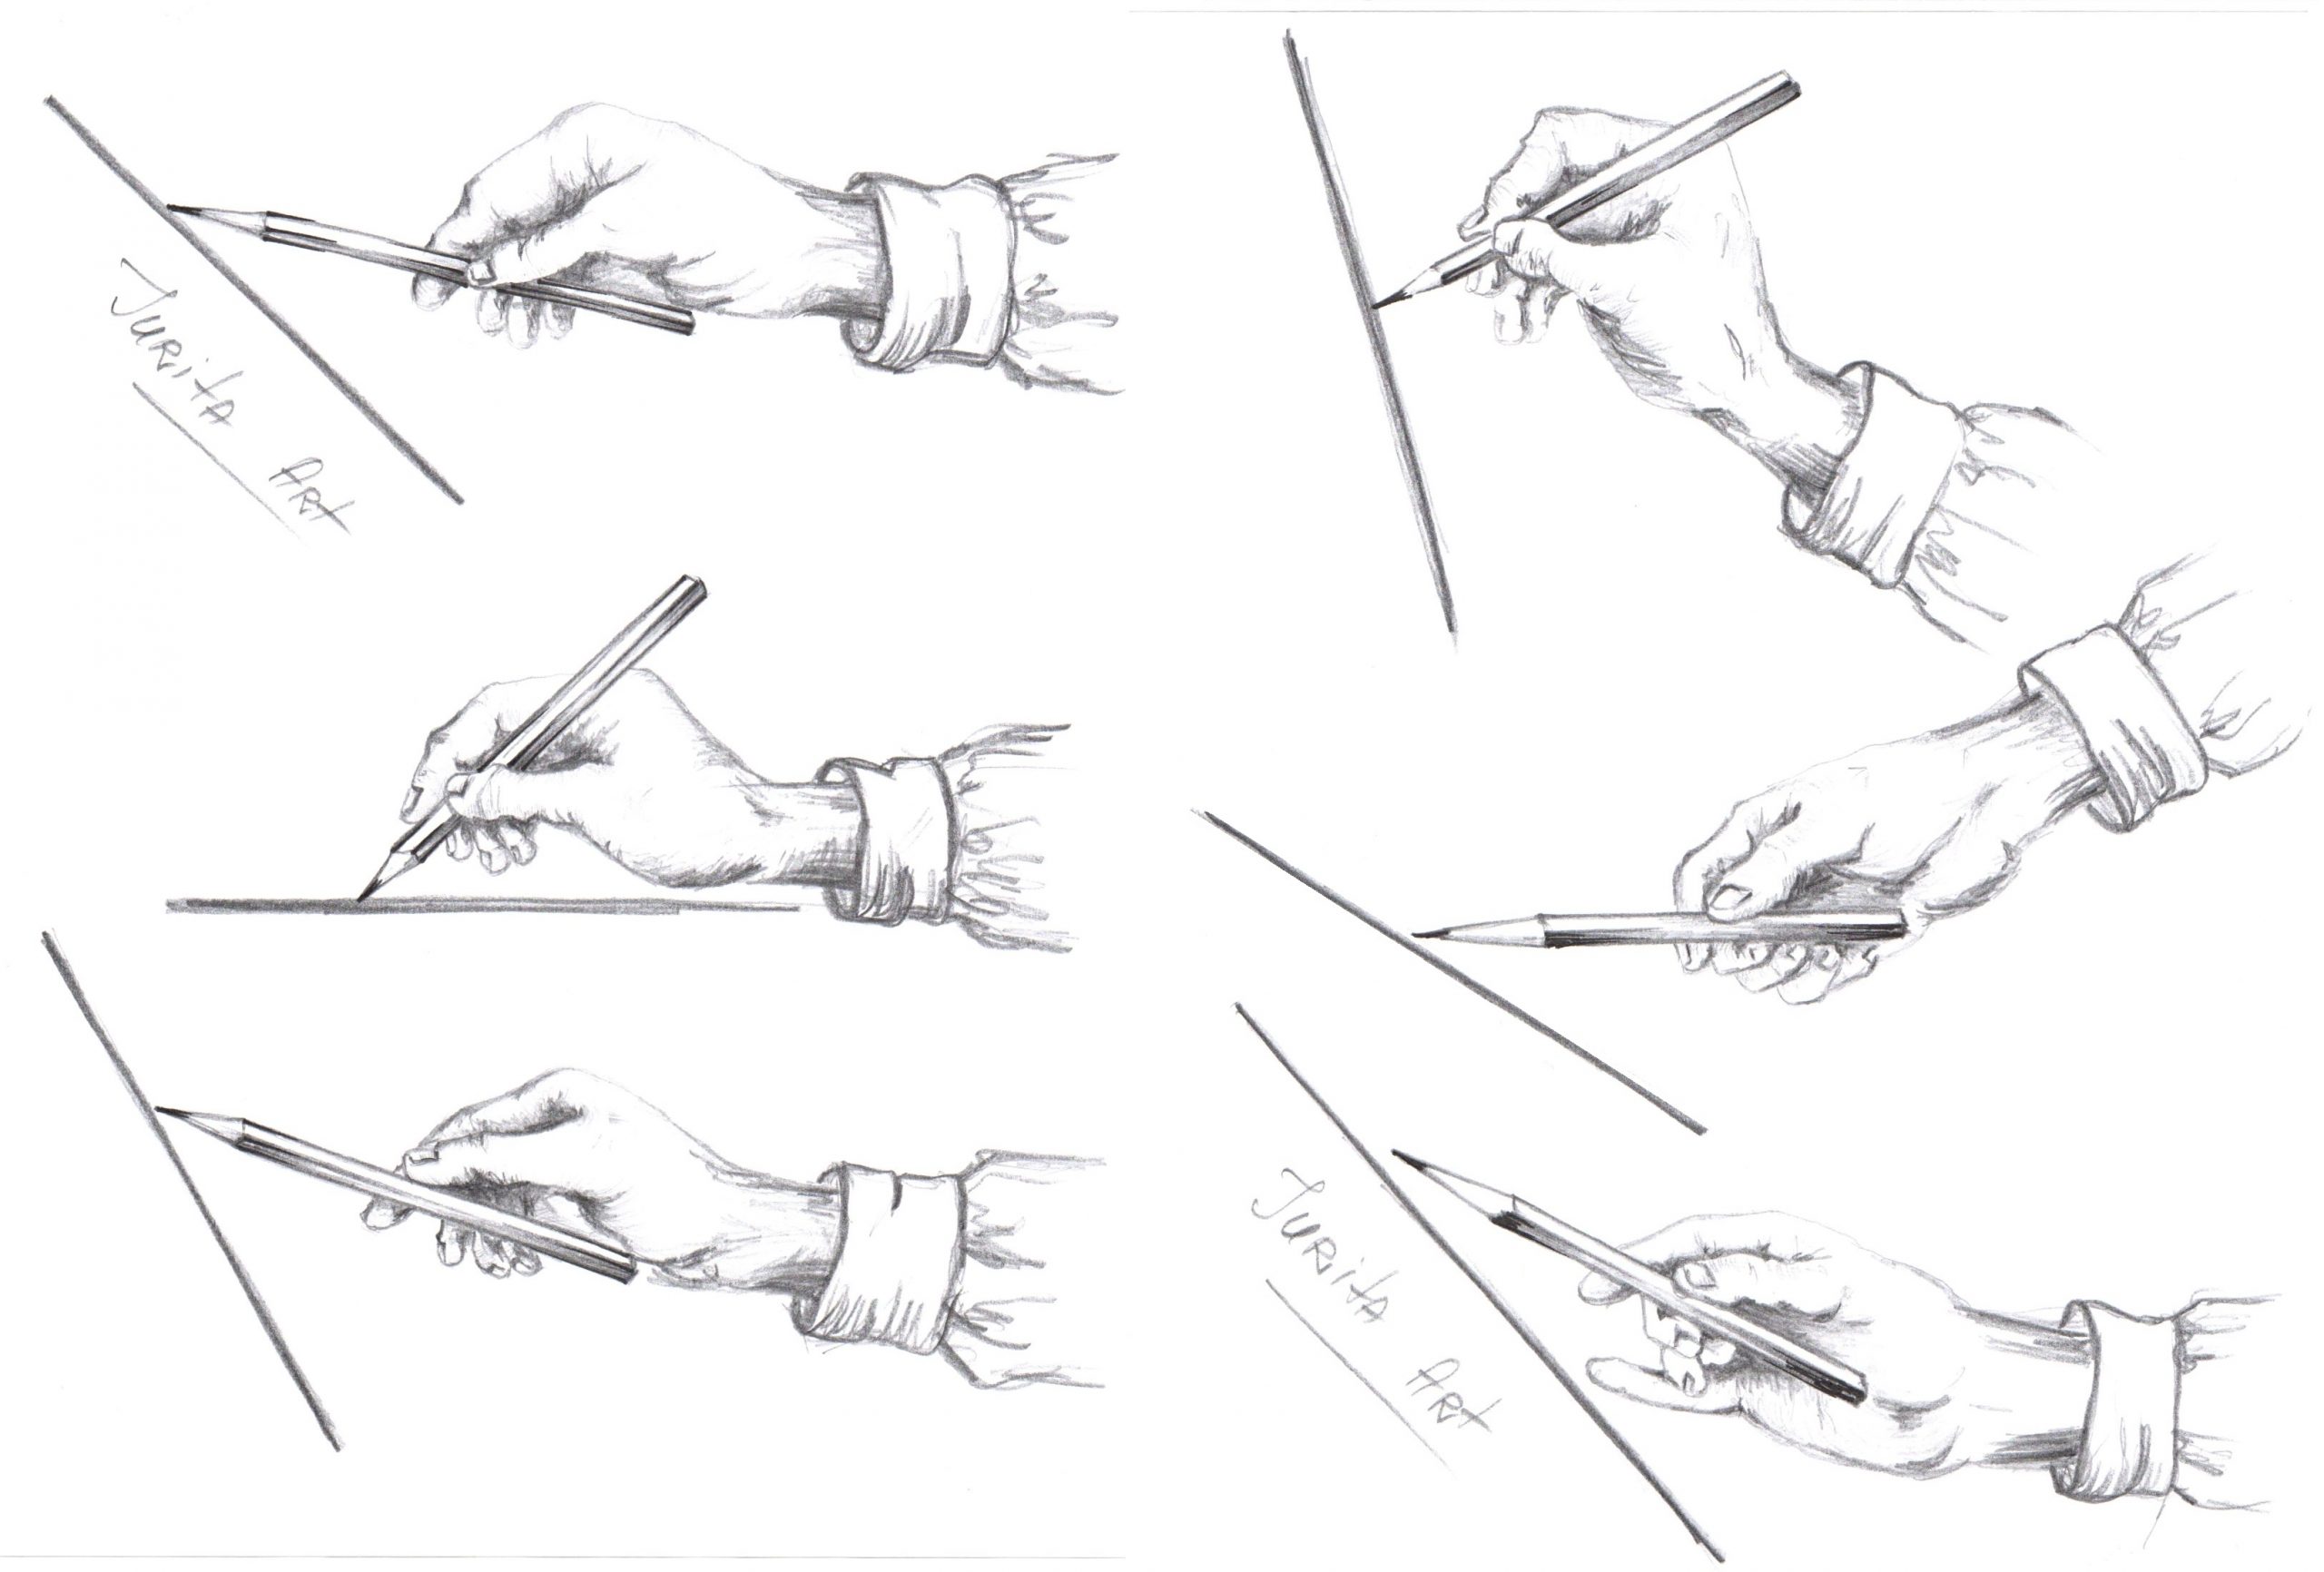 http://juritaart.com/wp-content/uploads/2020/11/4-art_workshop_drawing_basics_by_jurita_art_pencil_drawing_techniques-3-scaled.jpg